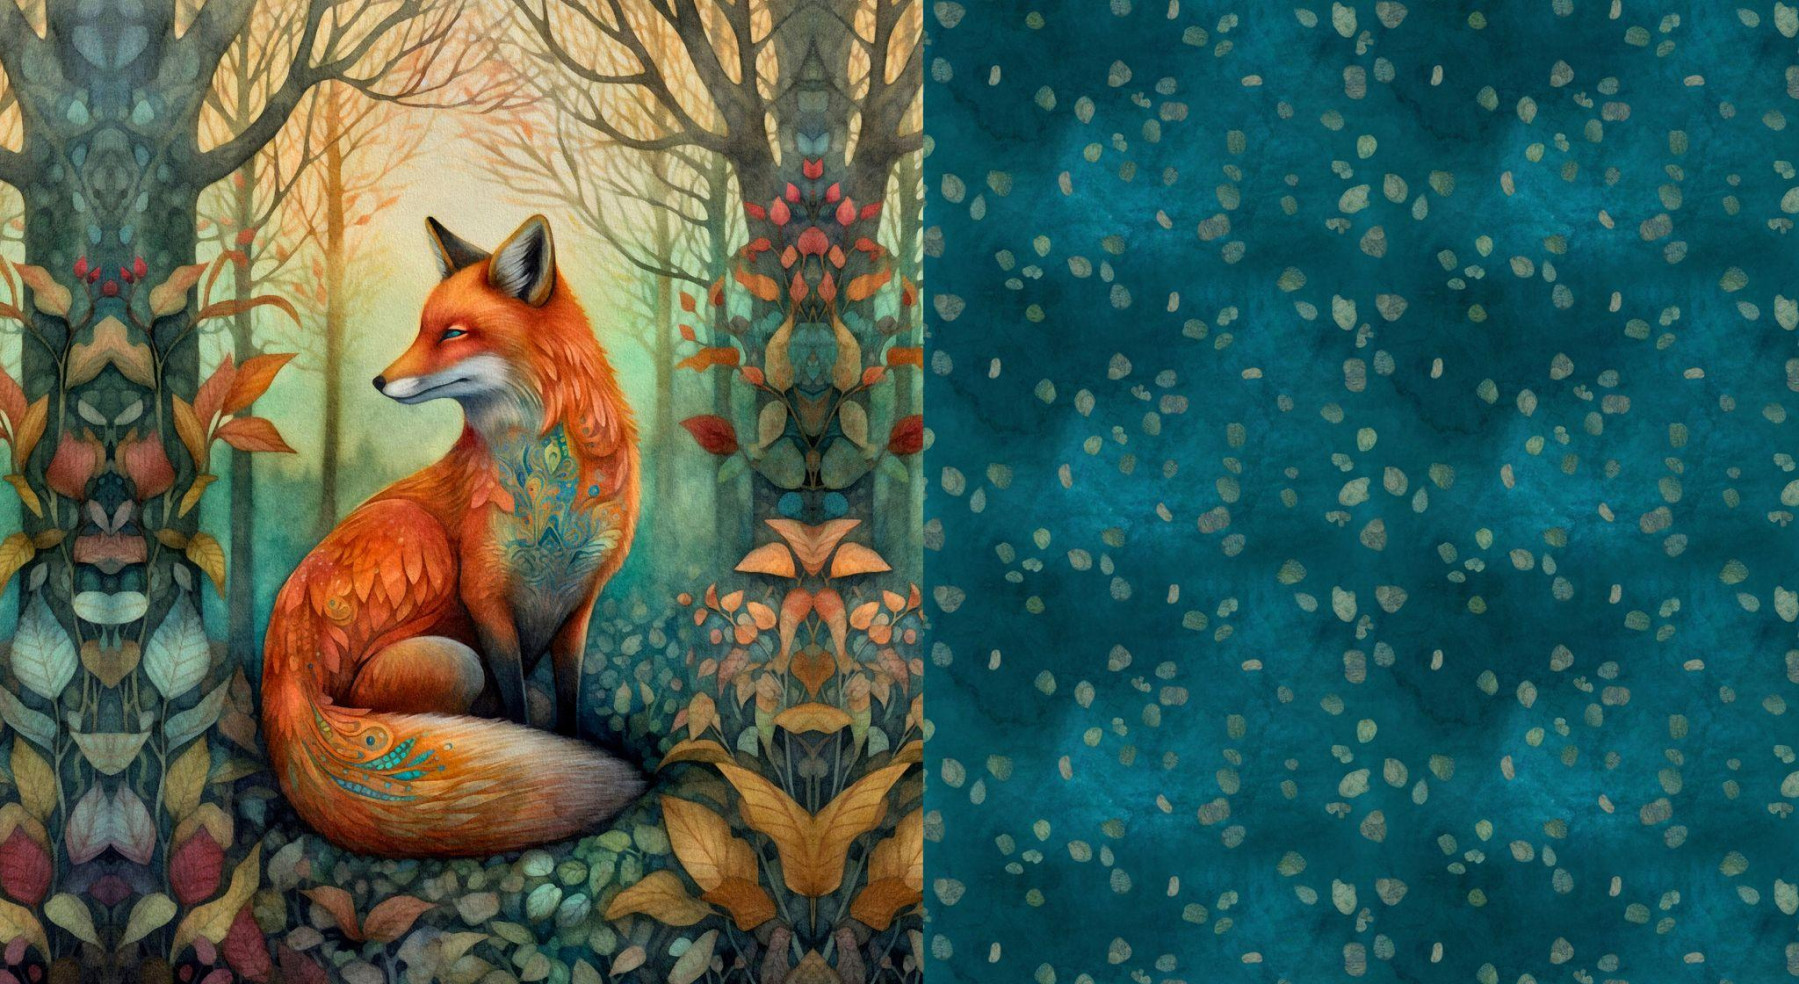 BOHO FOX - PANEL (60cm x 50cm) SINGLE JERSEY